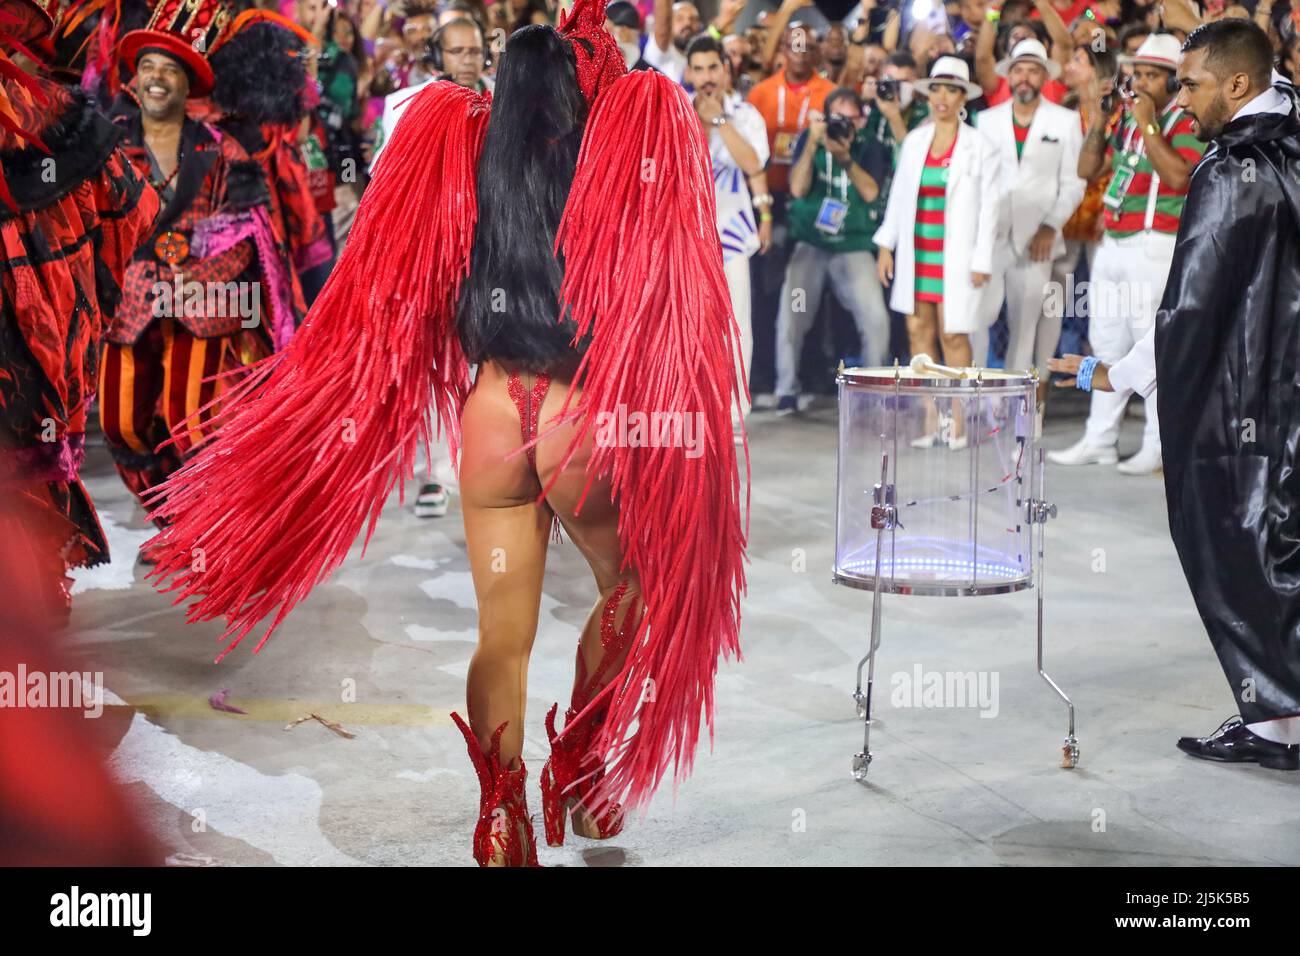 Fotos de paolla oliveira no carnaval 2022